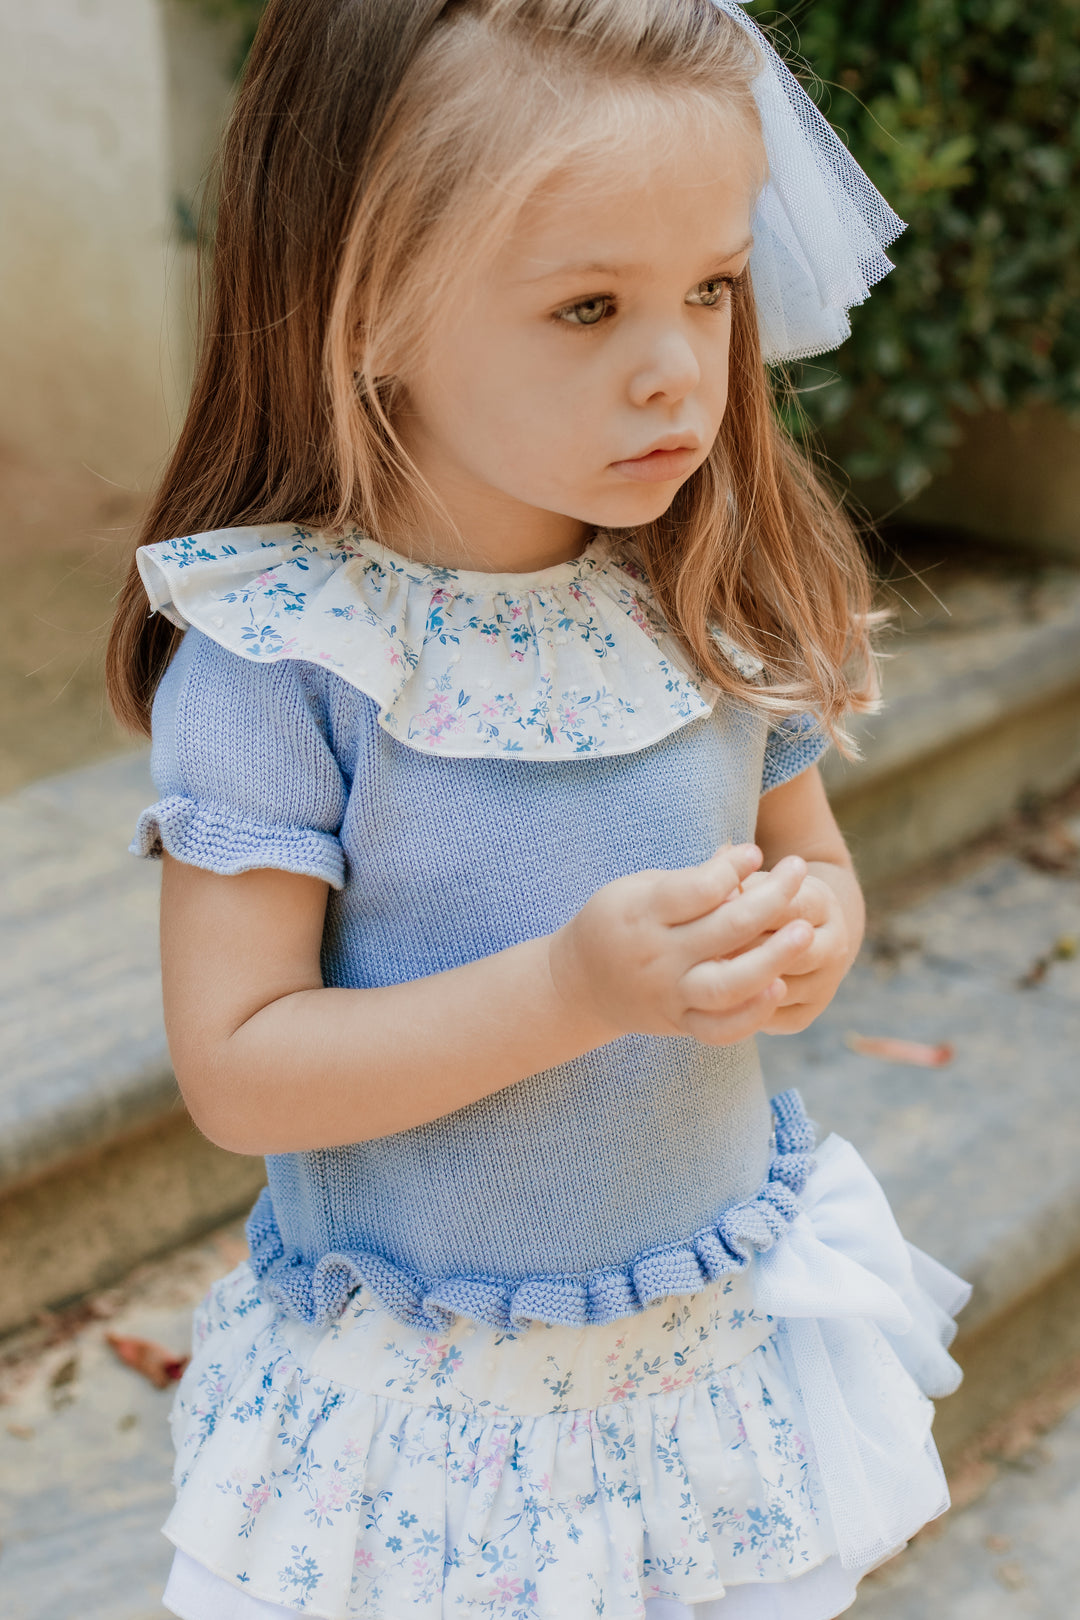 Rahigo PREORDER "Aurora" Dusky Blue Knit Top & Floral Skirt | Millie and John